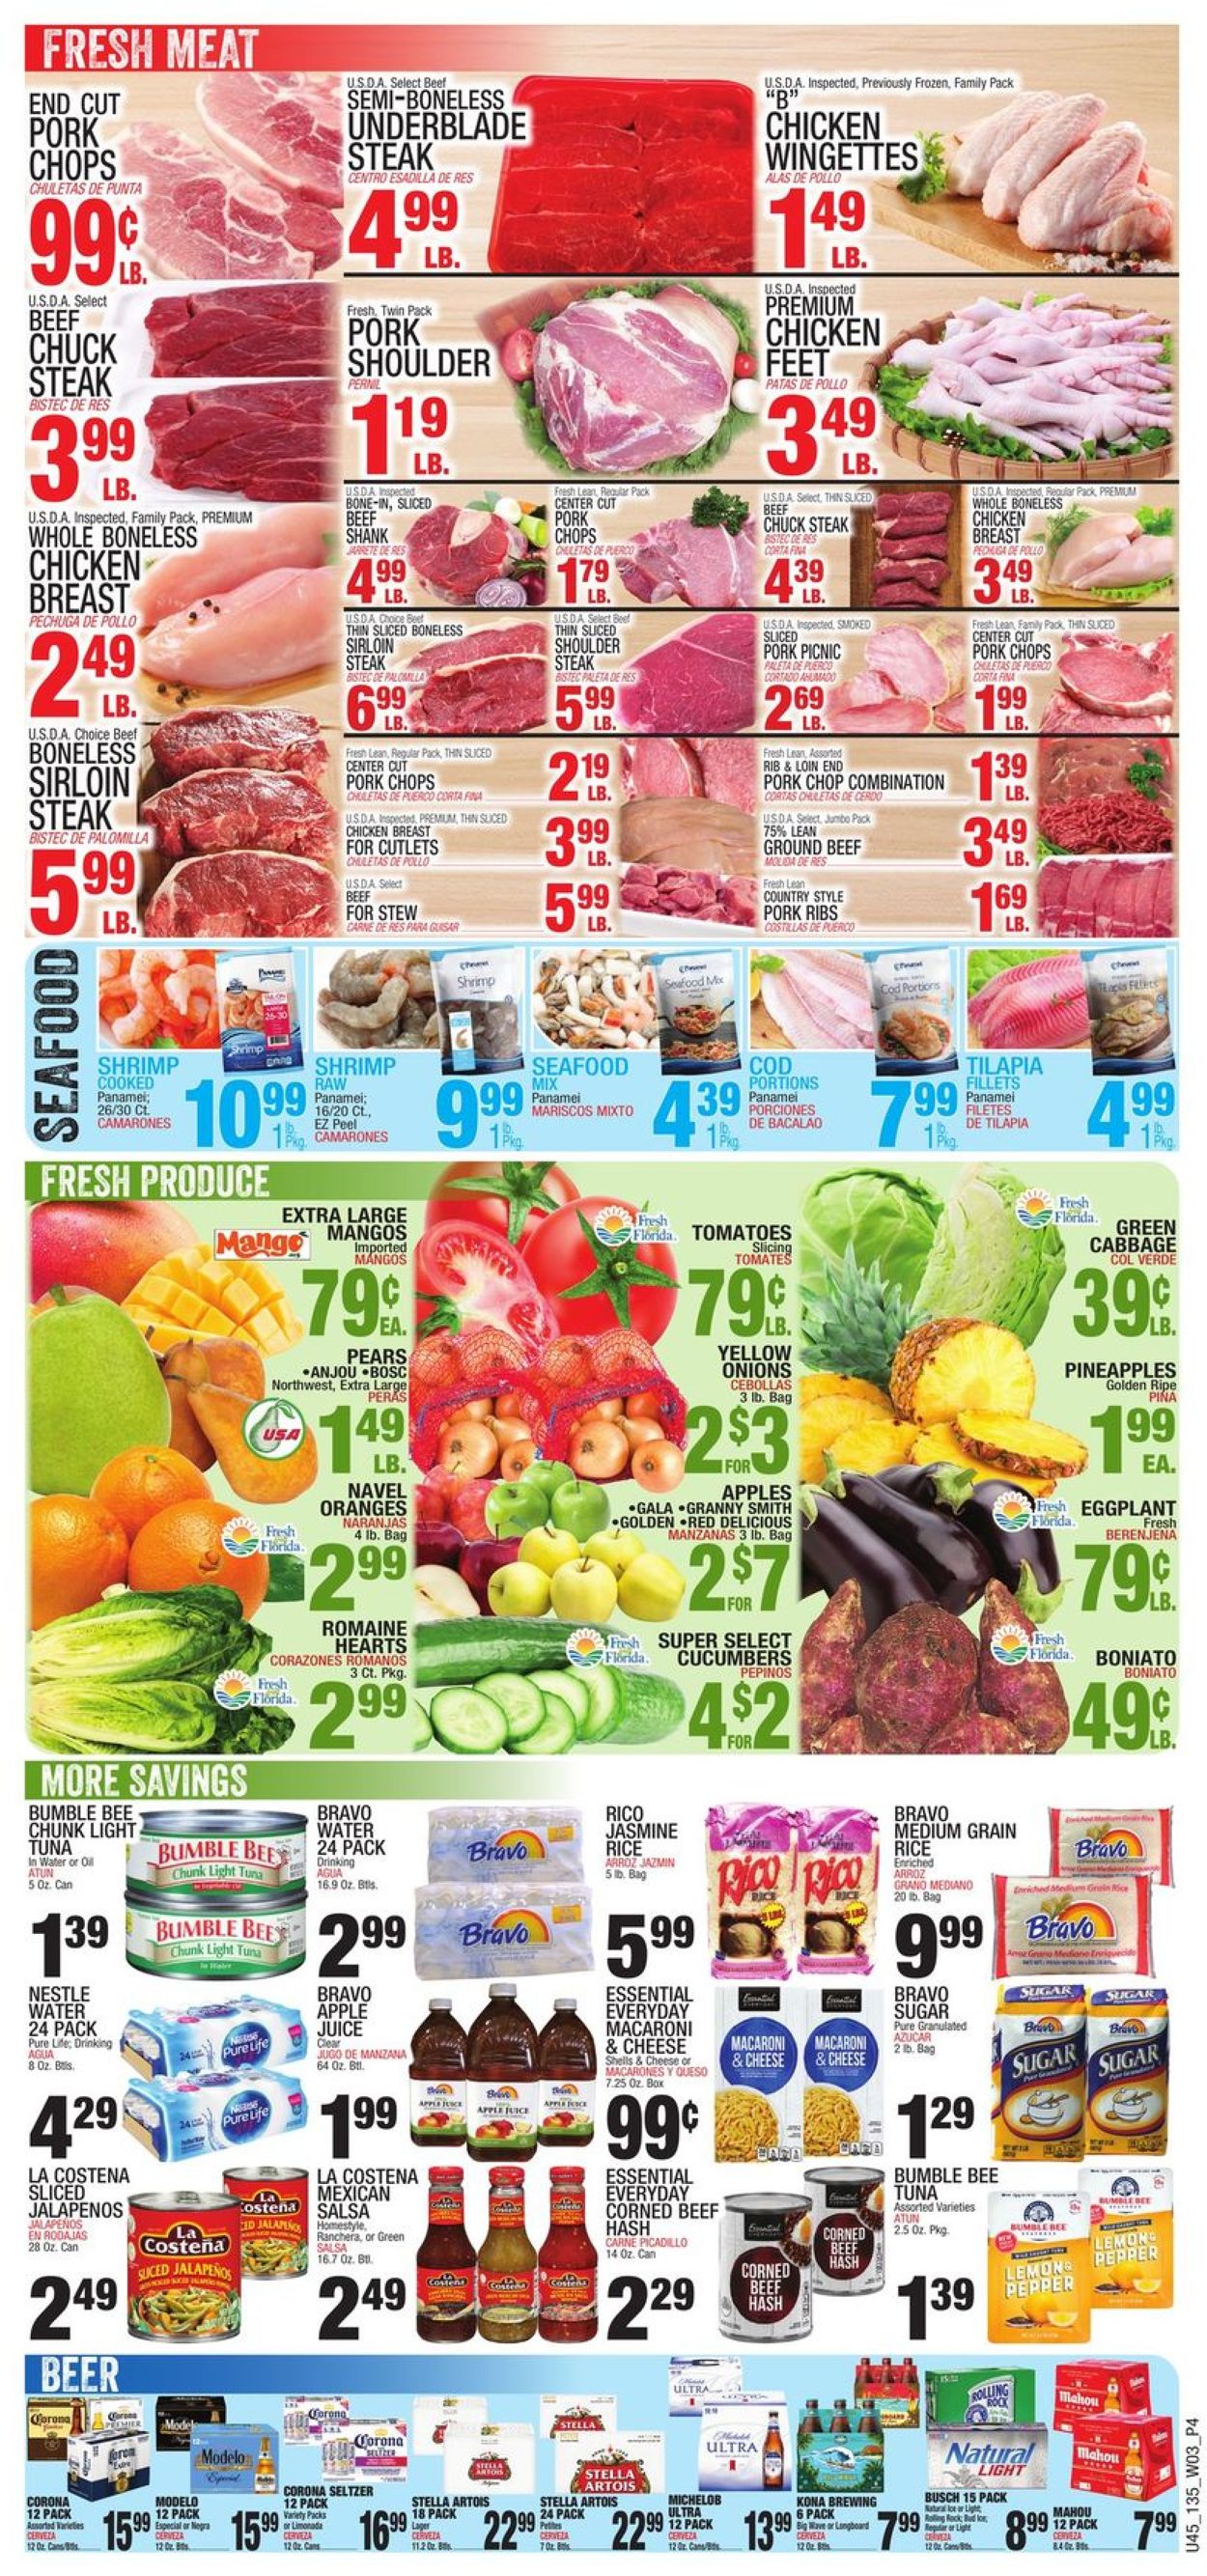 Catalogue Bravo Supermarkets from 01/13/2022